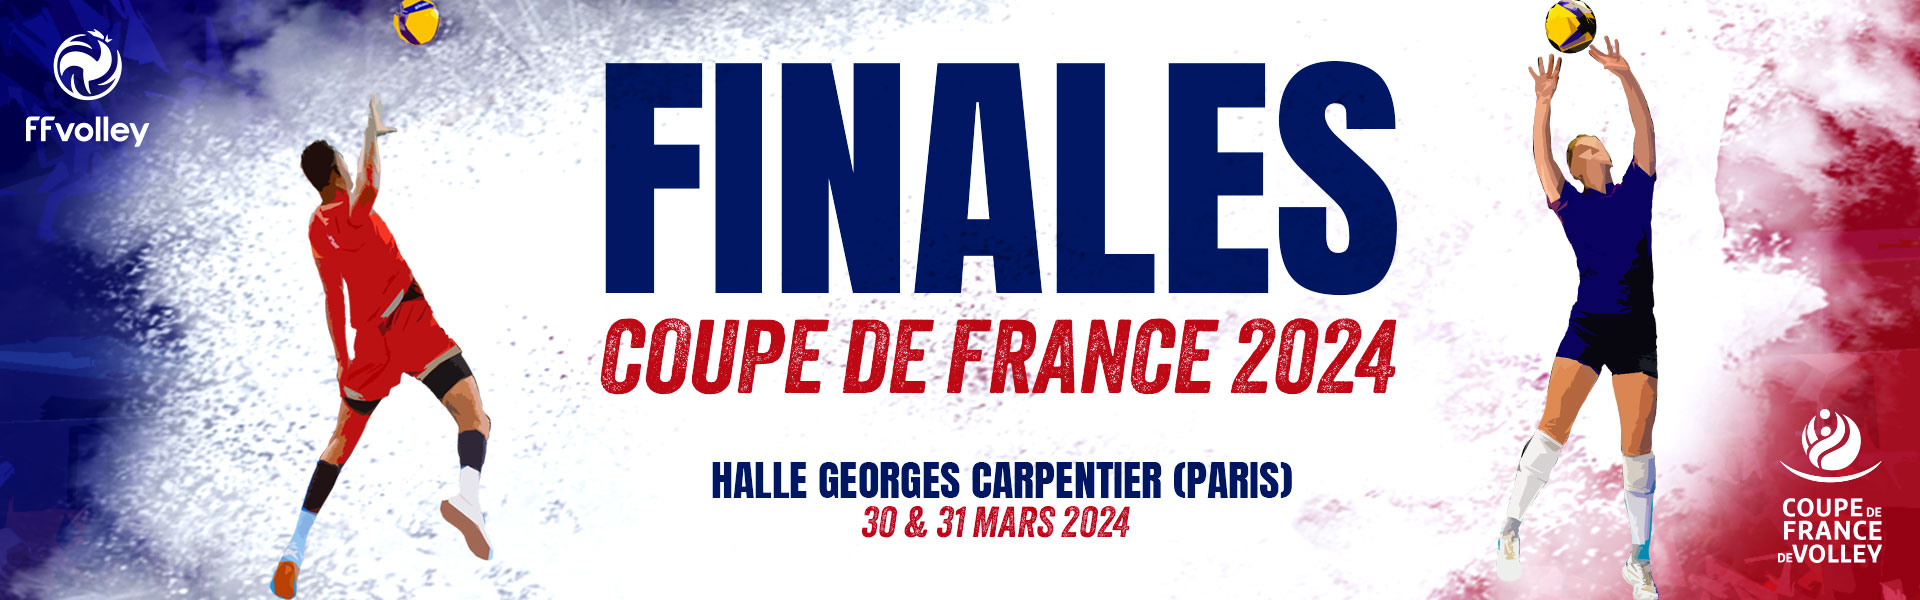 FFVolley_billetterie_finales_coupe_de_france